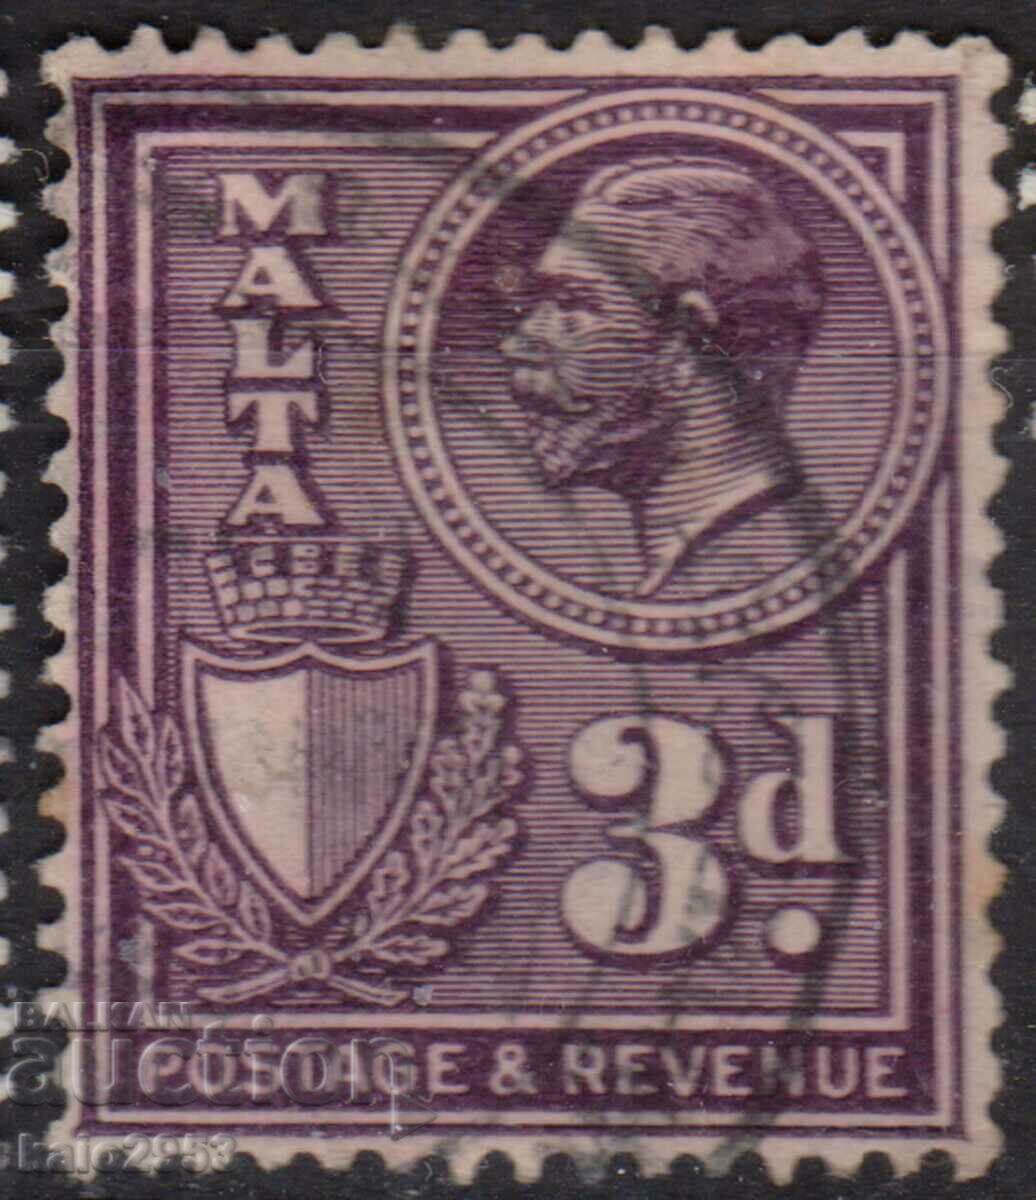 GB/Malta-1930-Regular-KE V+stamp-"Postage/Revenue", γραμματόσημο